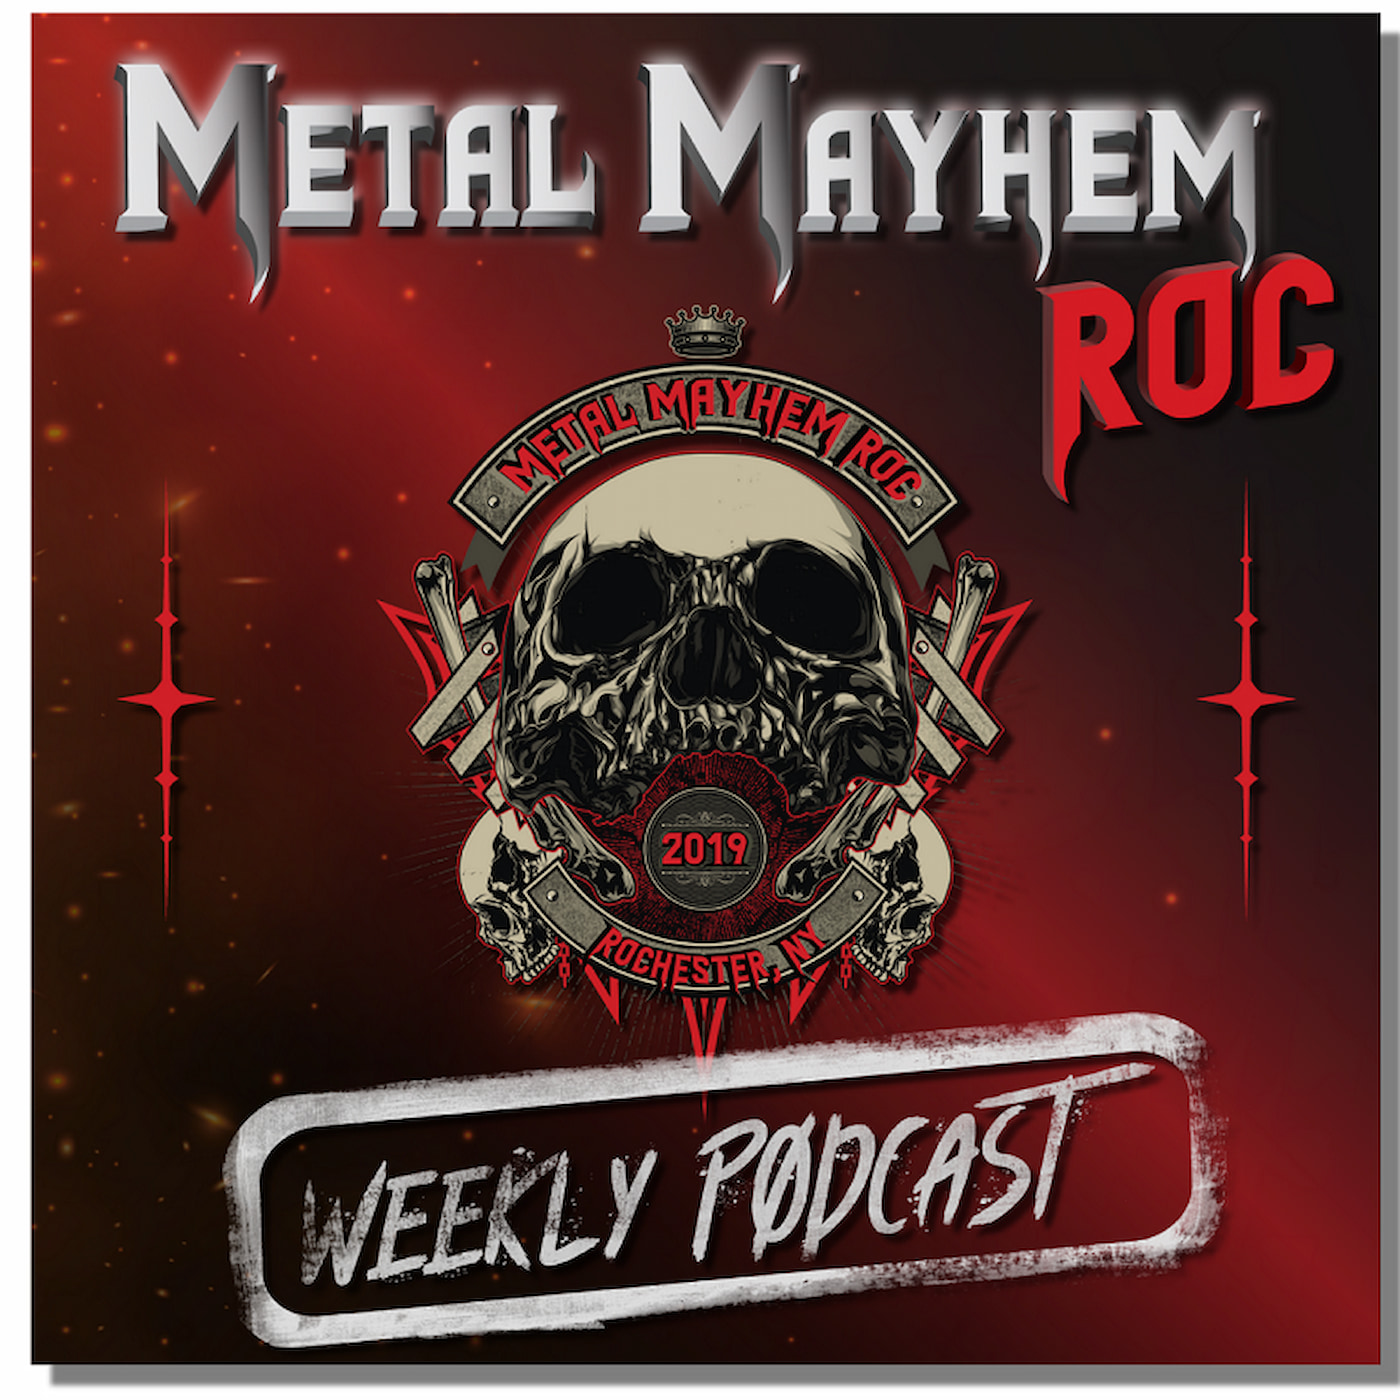 Metal Mayhem ROC